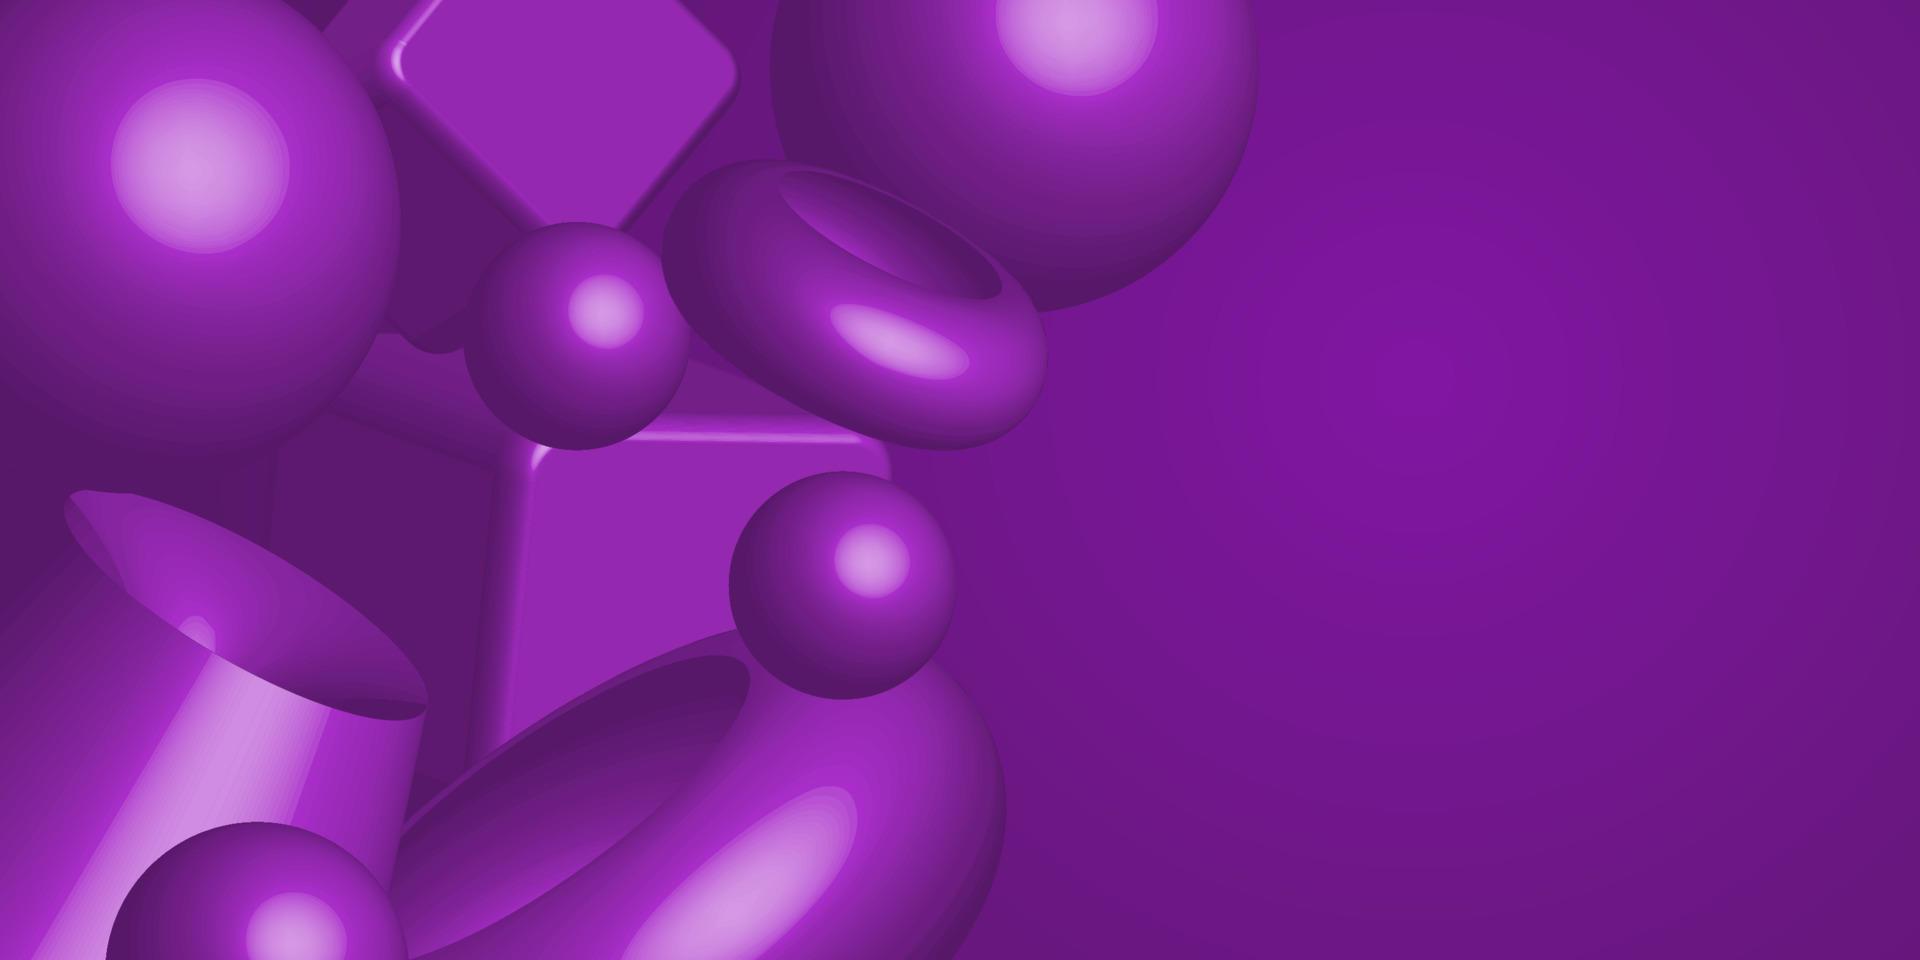 Purple geometric shapes backdrop. Abstract elegant background. Vector 3d illustration. Banner or sign design.